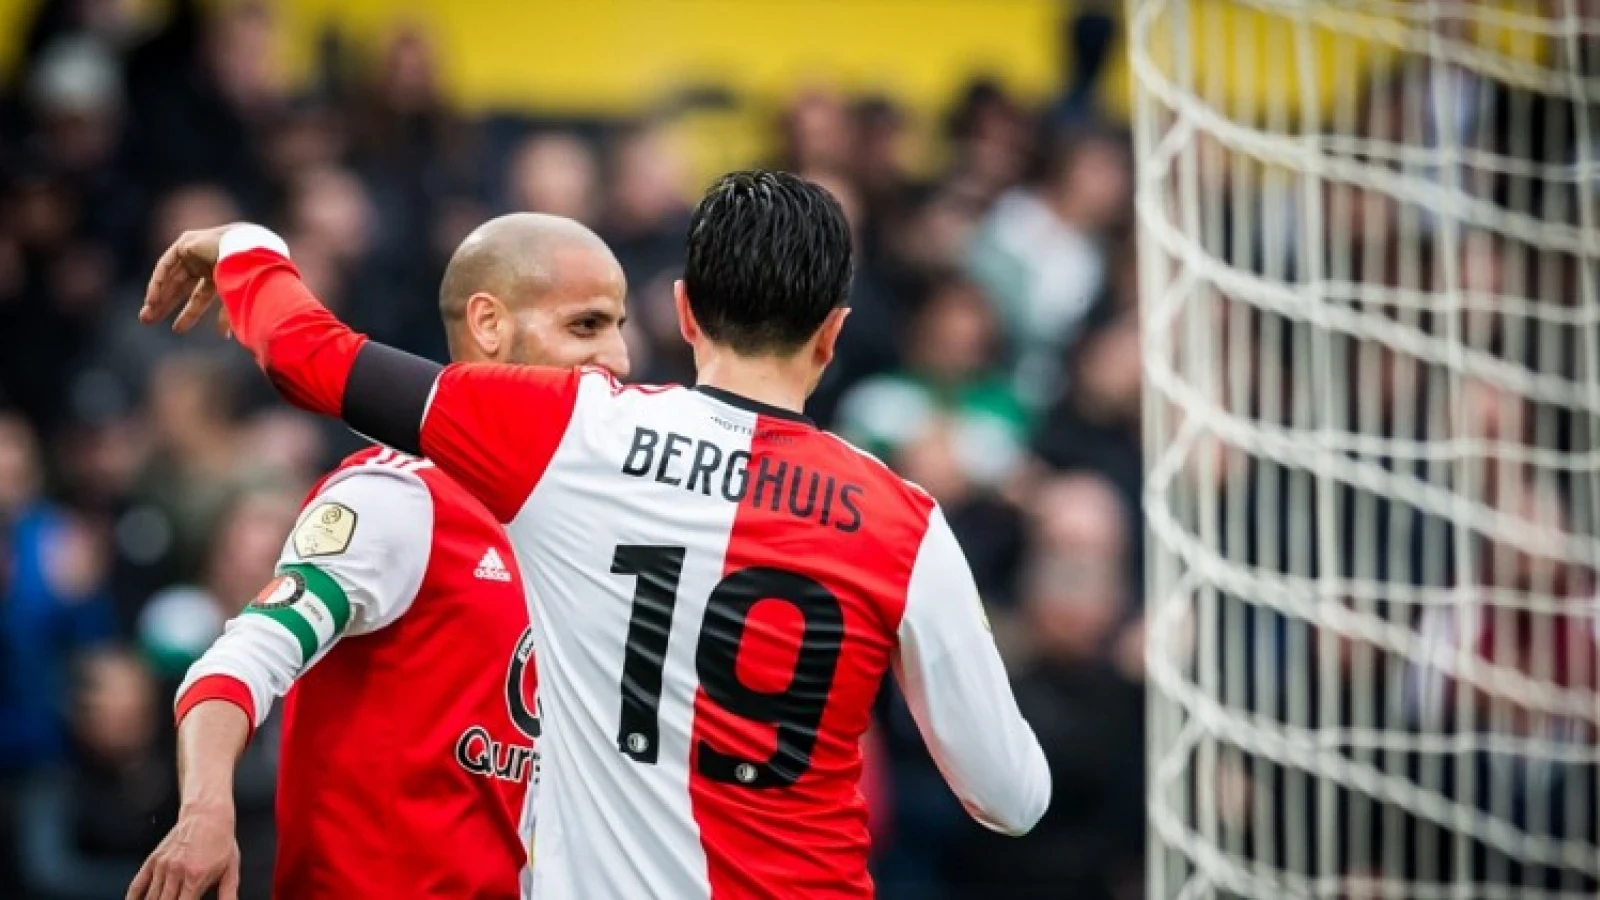 'Onderhandelingen gestart tussen clubs om Feyenoord-sterkhouder'